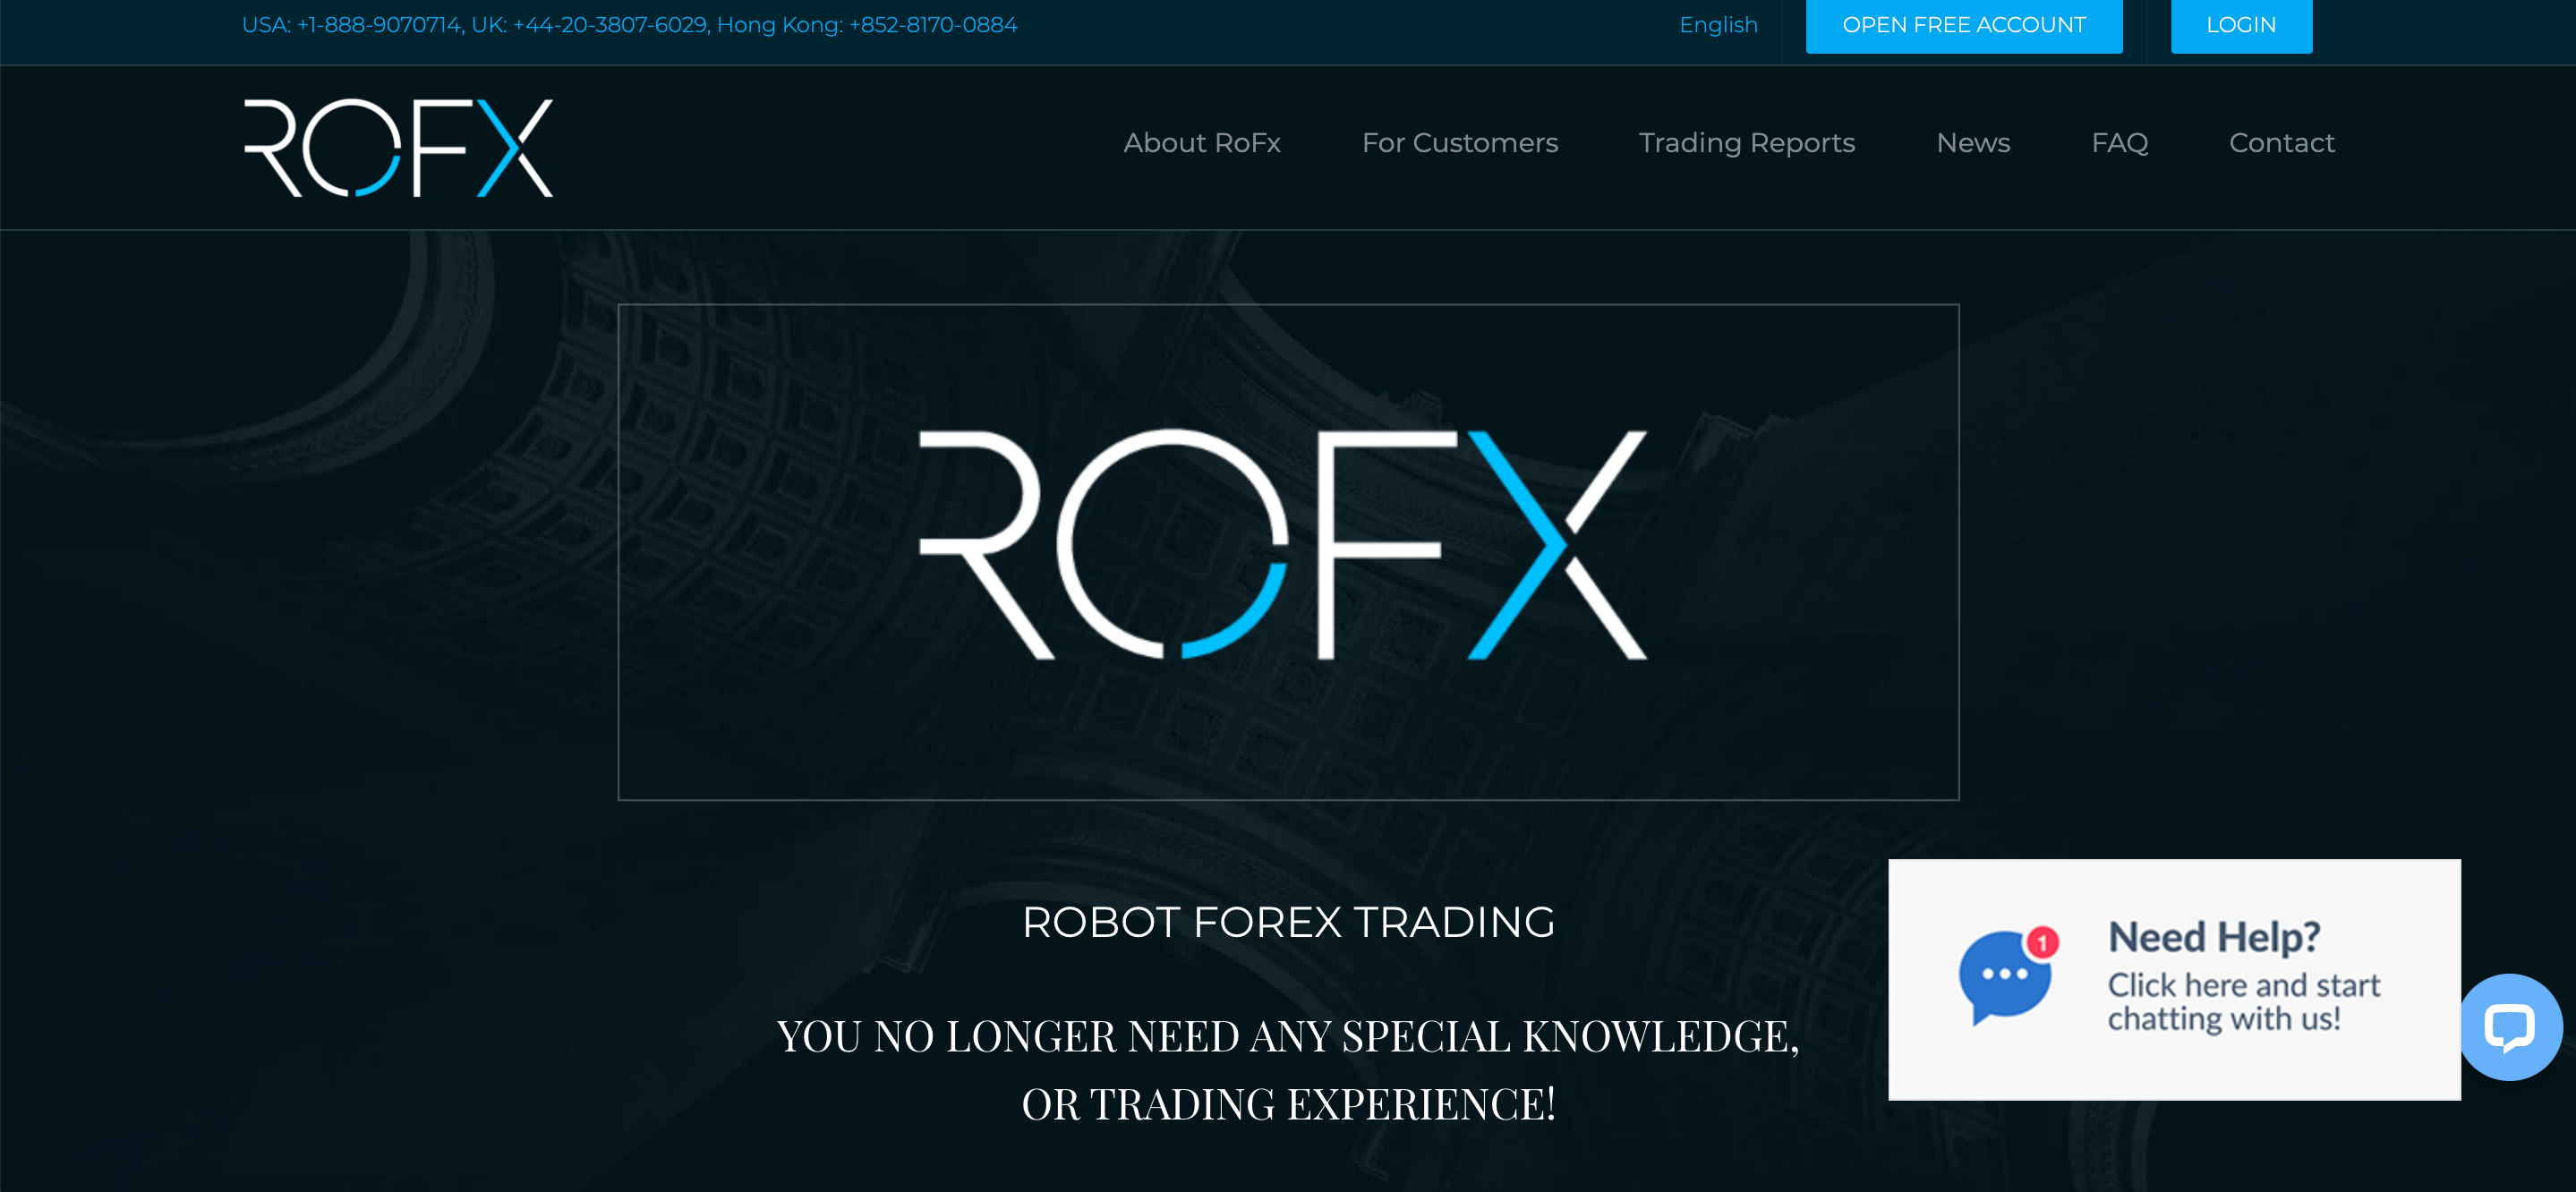 ROFX website